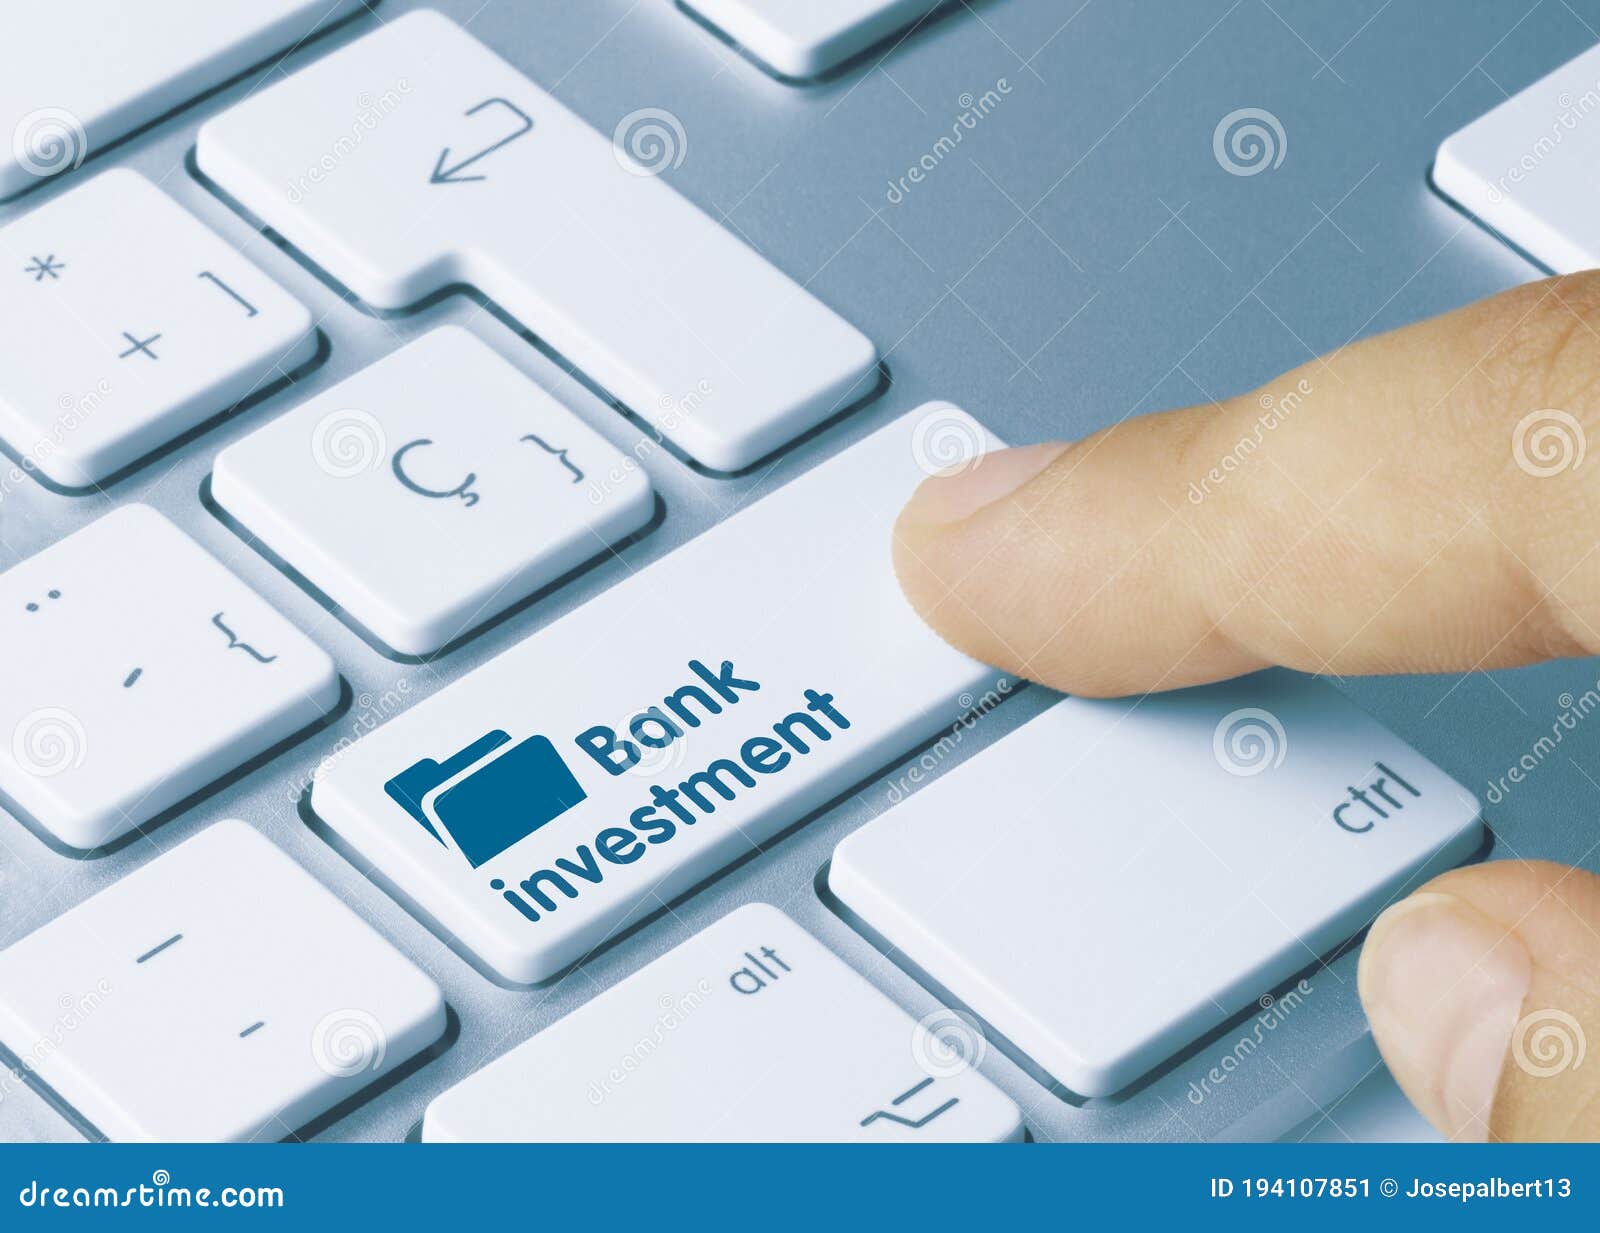 bank investment - inscription on blue keyboard key